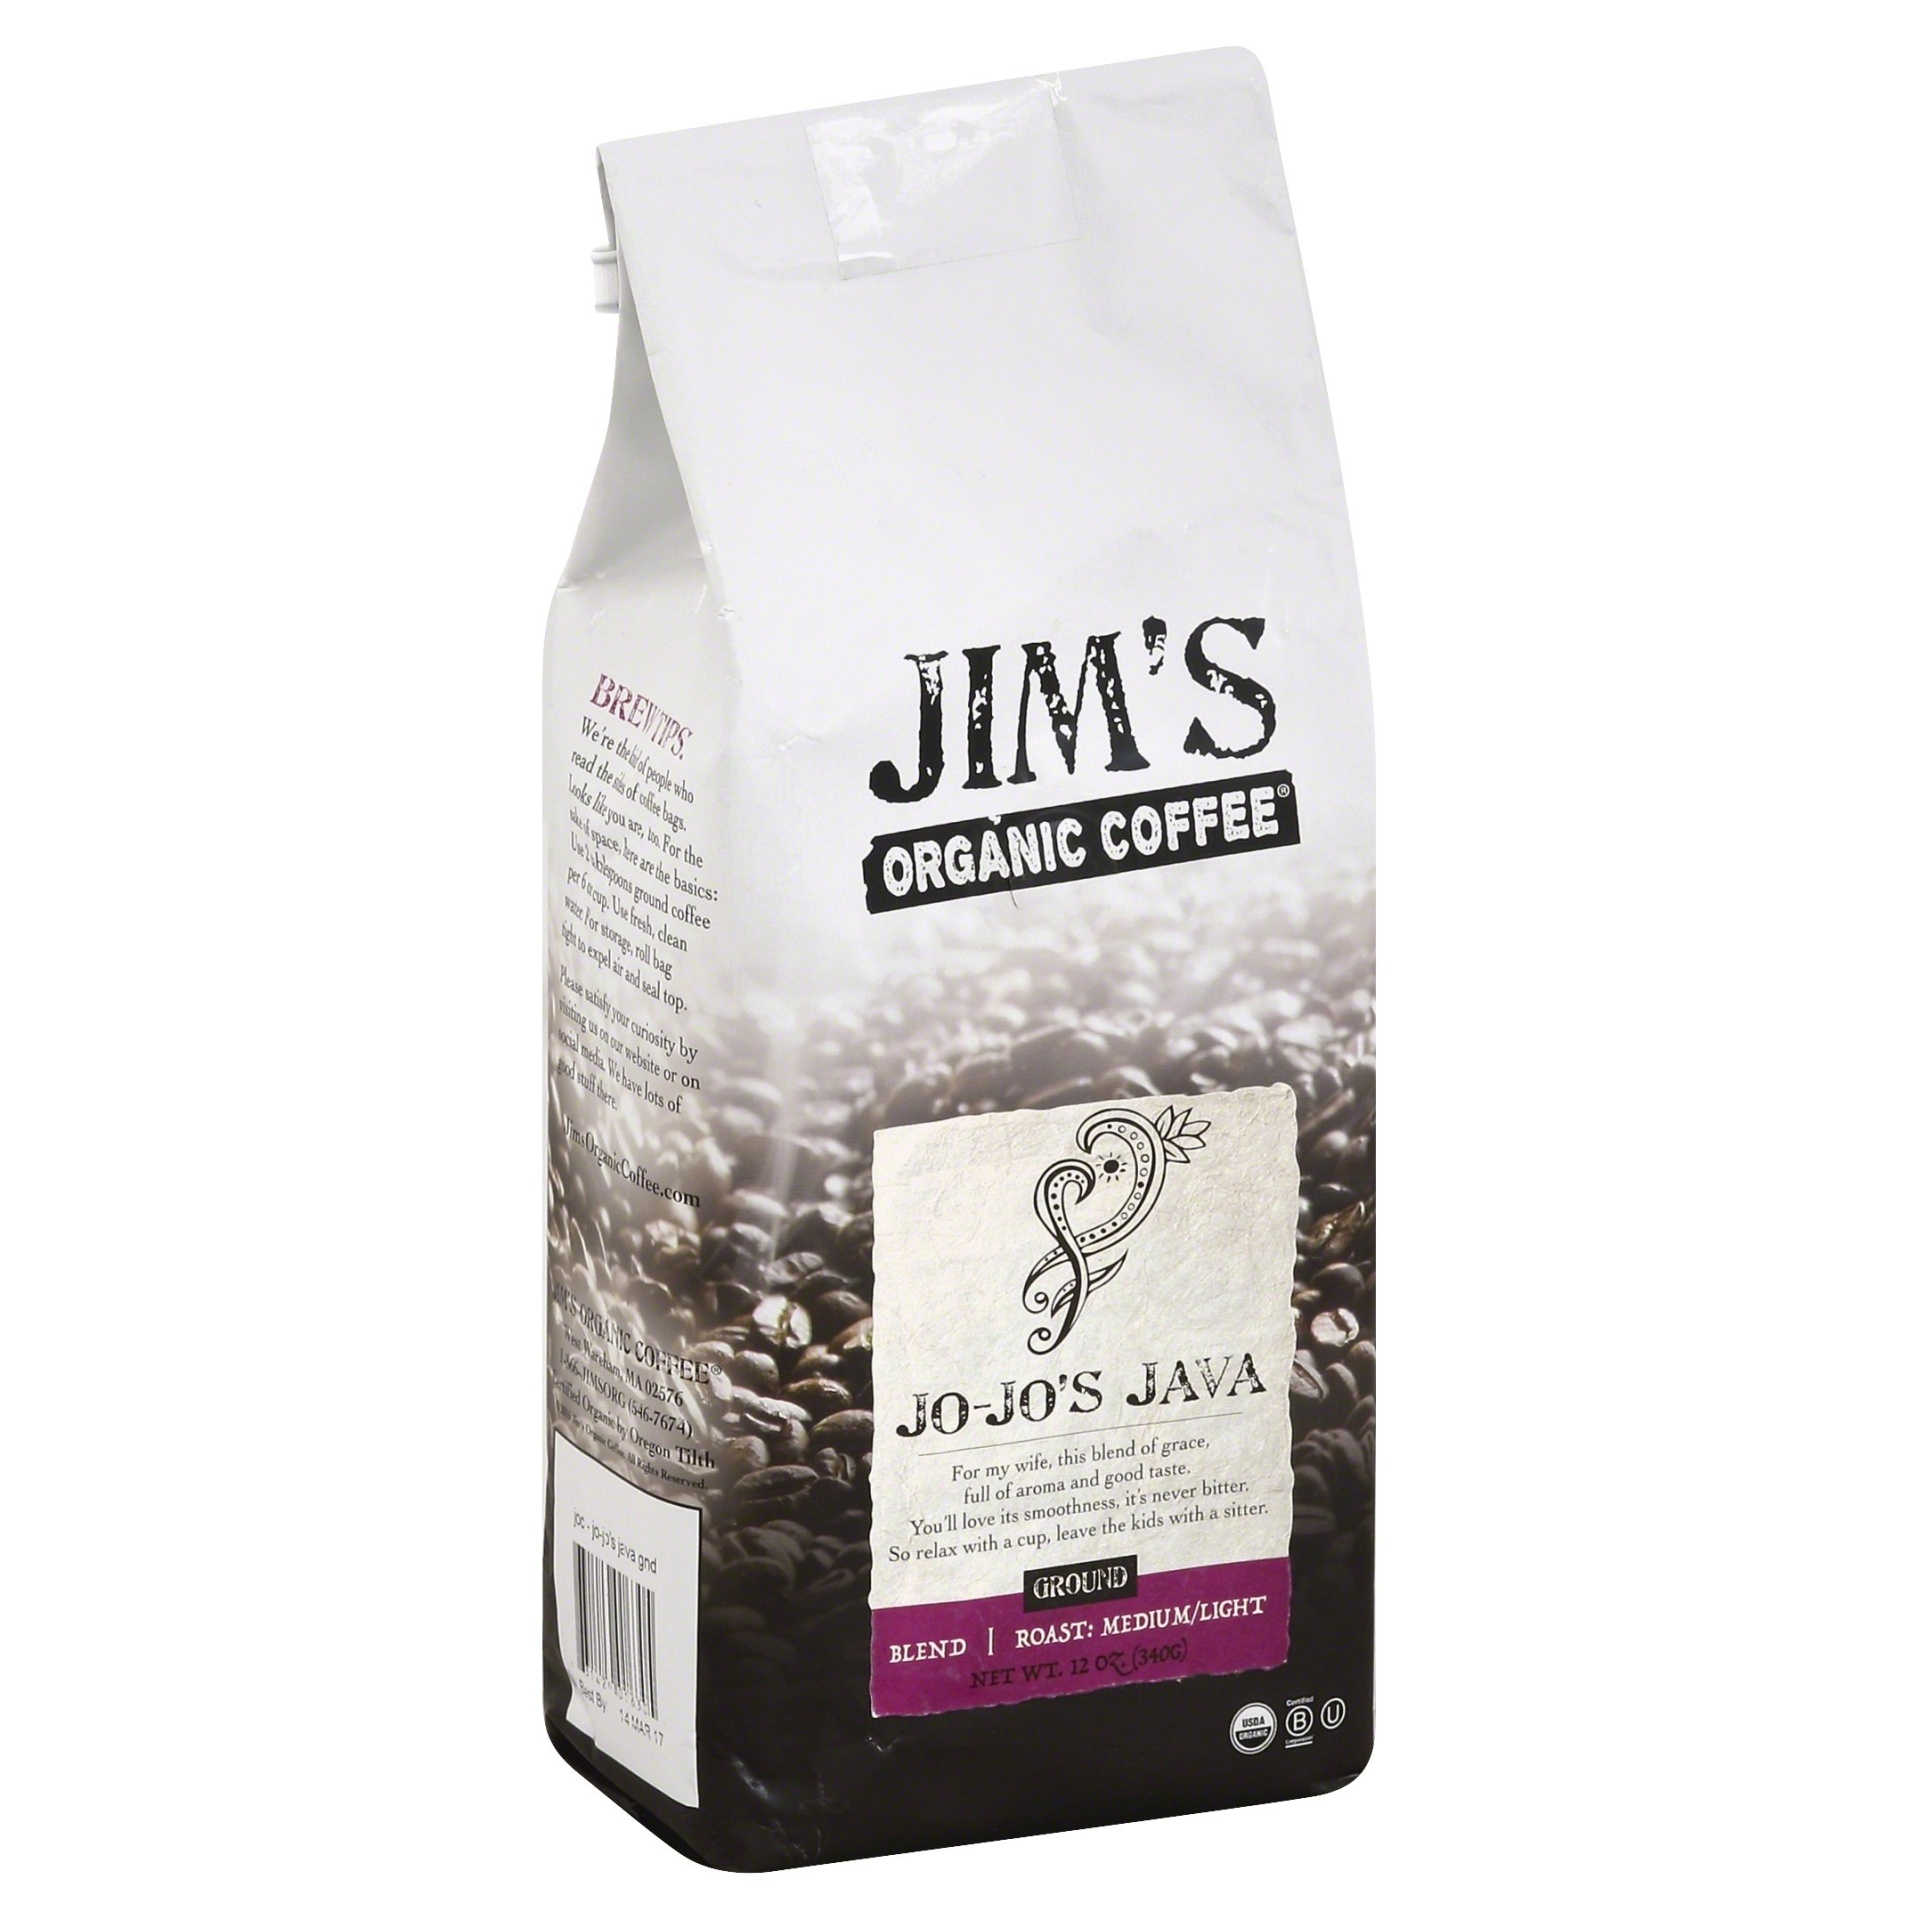 jims organic coffee expresso bean